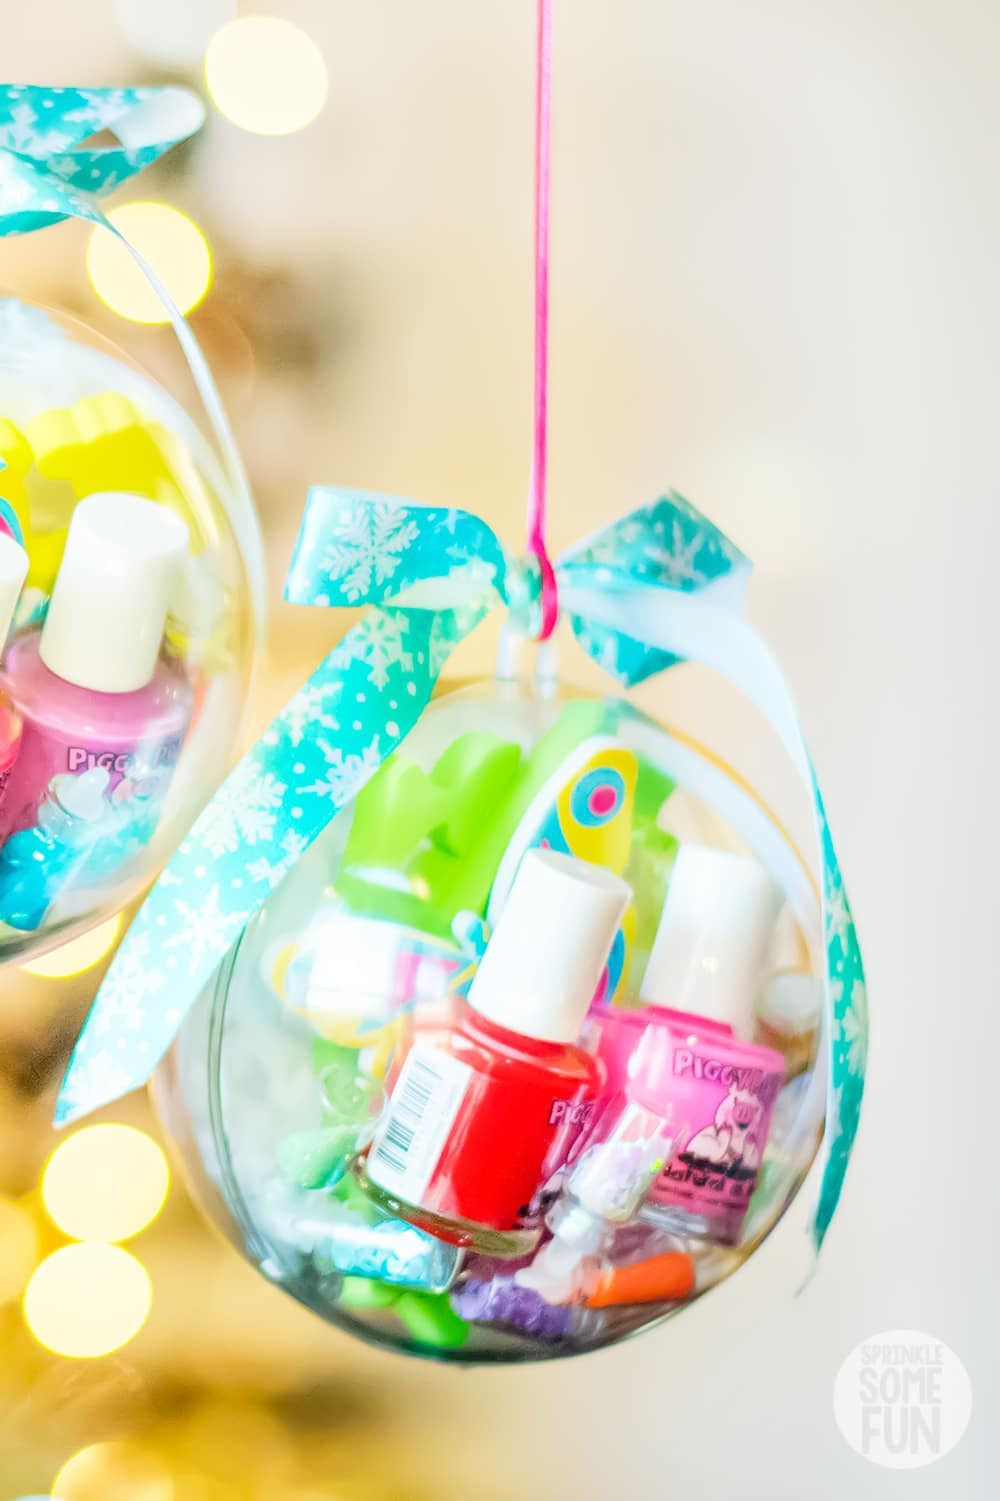 DIY Christmas Gifts For Girls
 Nail Kit Ornaments ⋆ DIY Christmas Gift for Girls